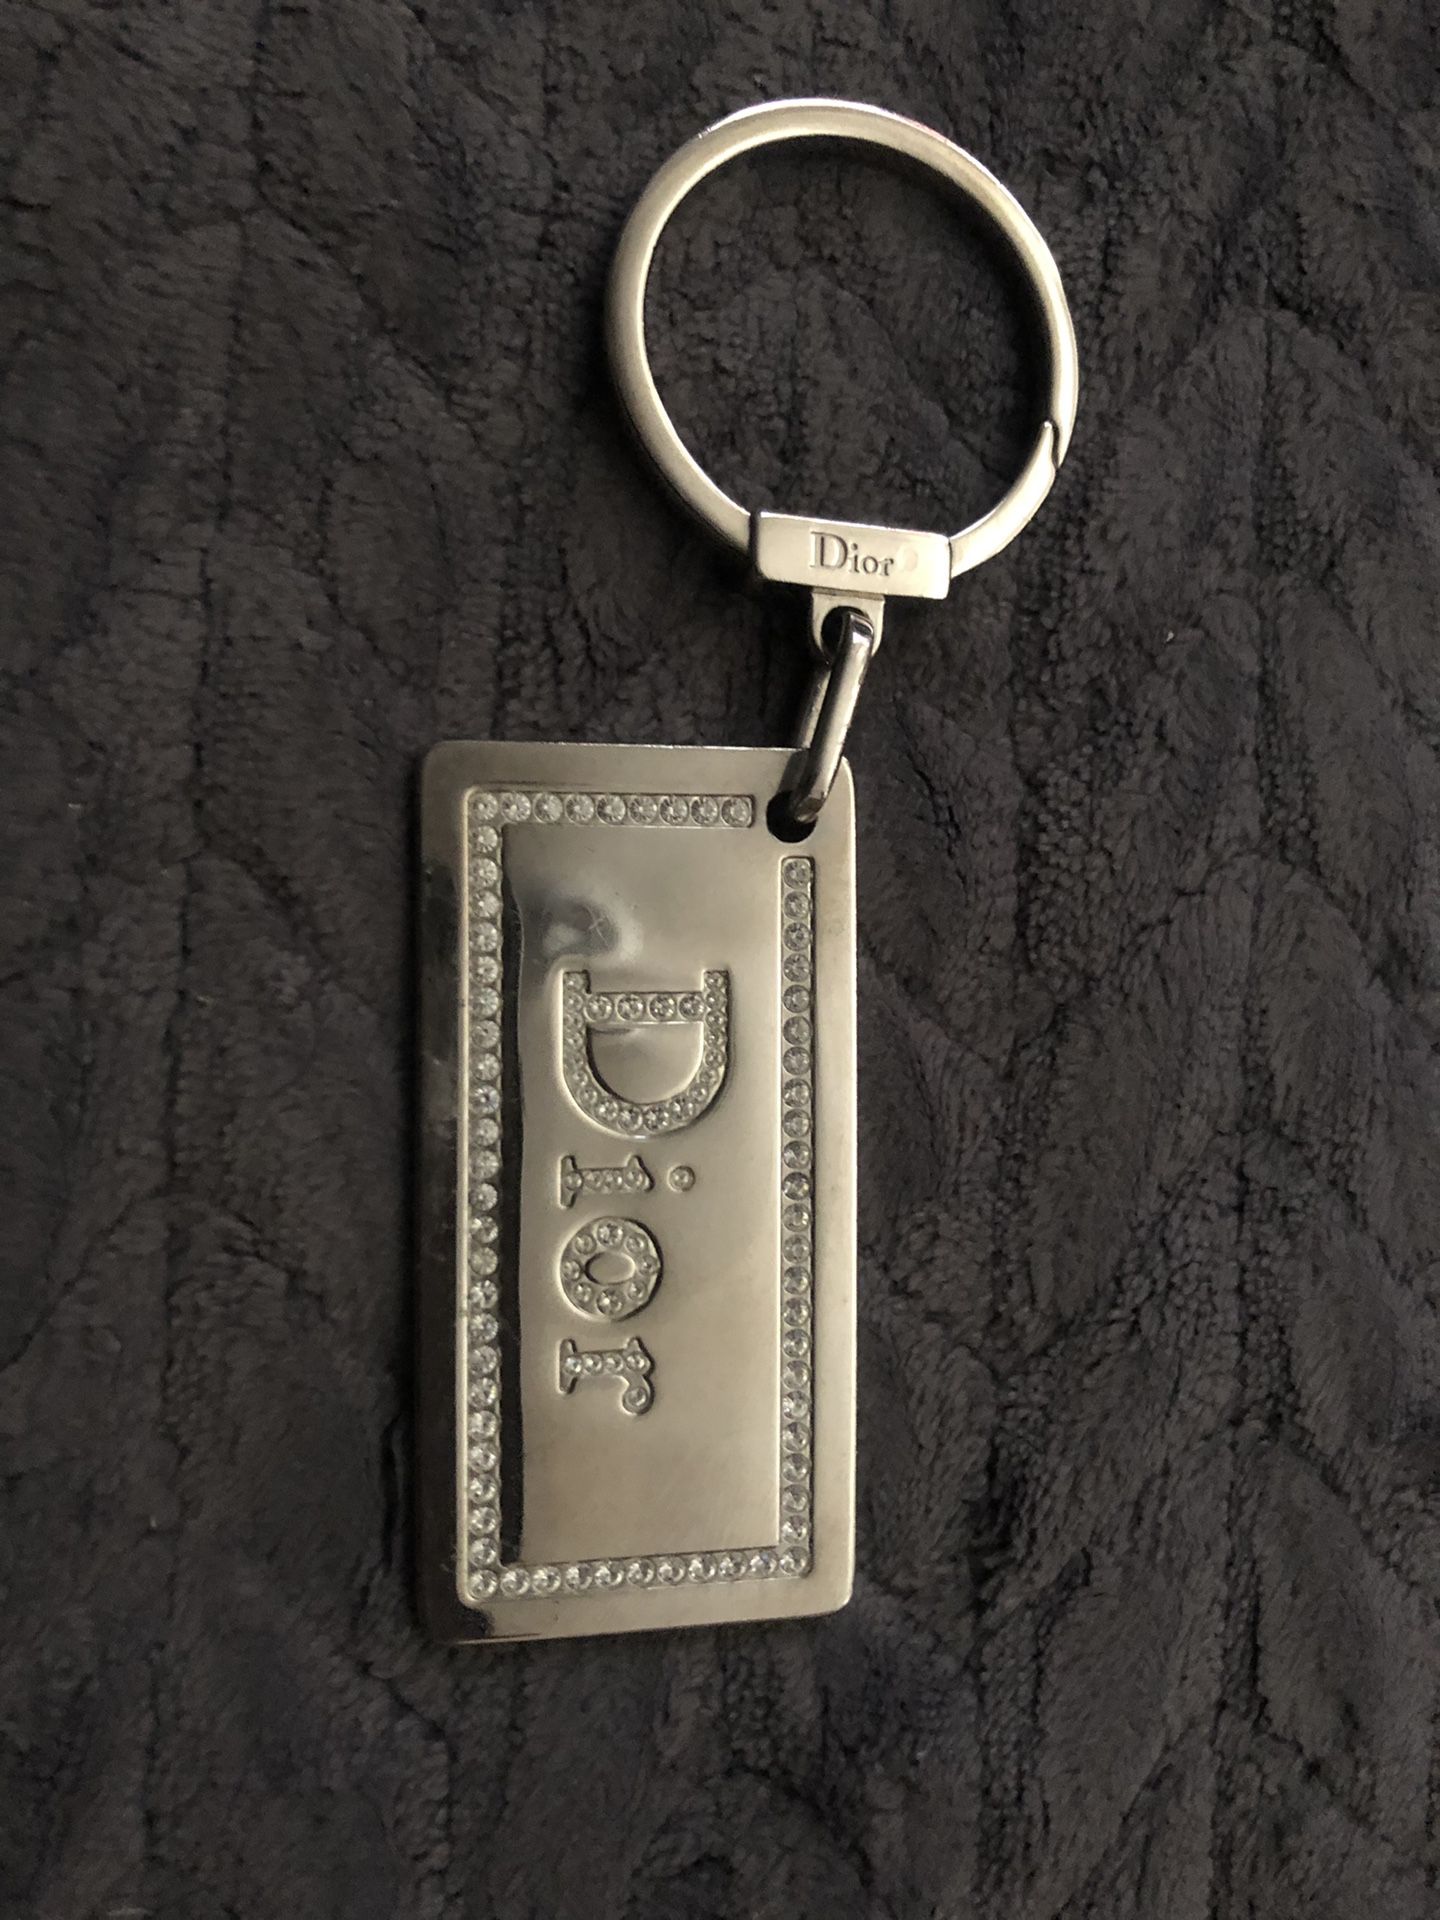 Authentic Christian Dior keychain